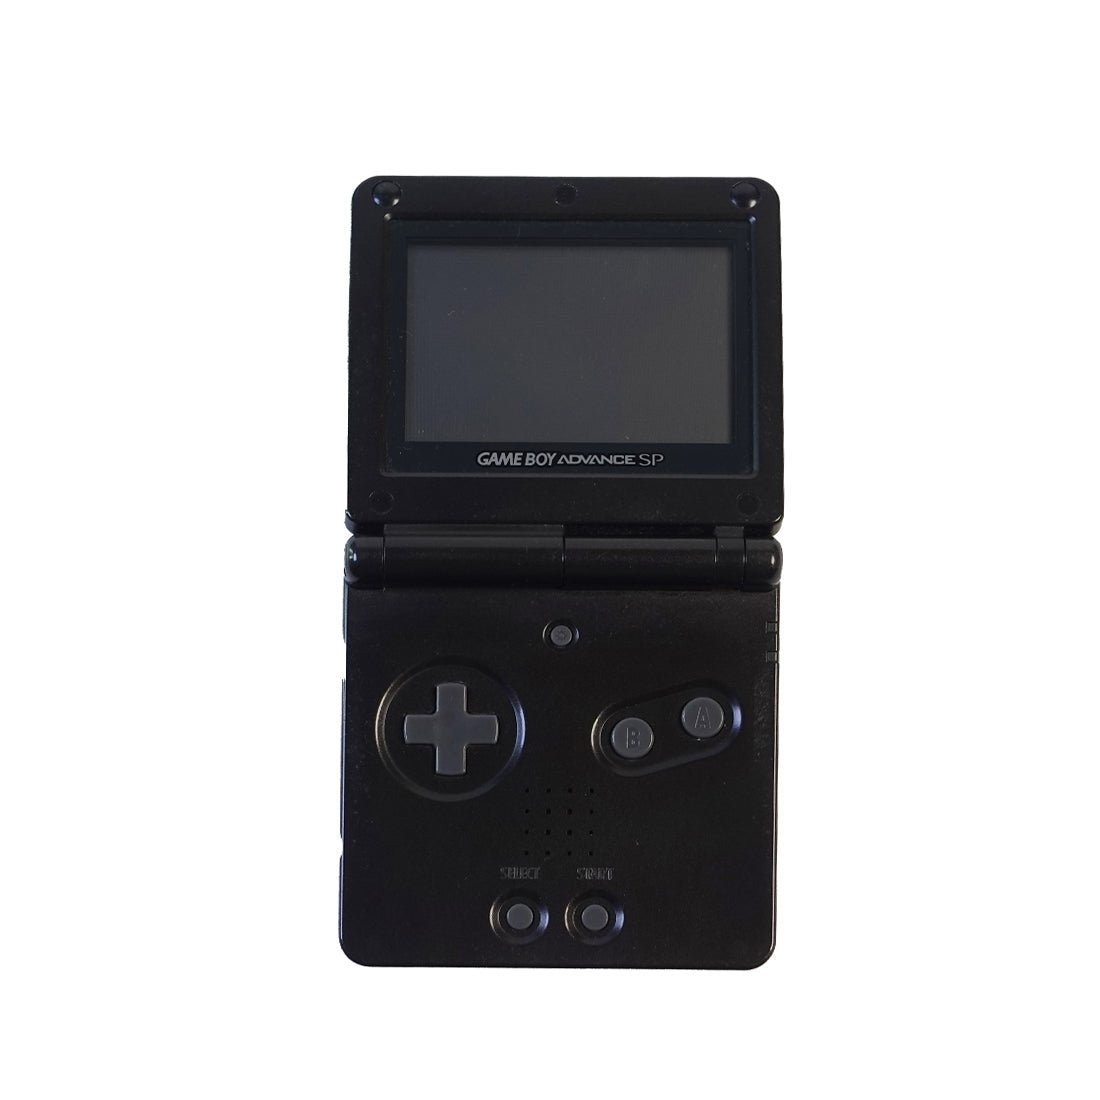 Pre-Owned) Gameboy Advance SP - Black - ريترو | 974 | ستور